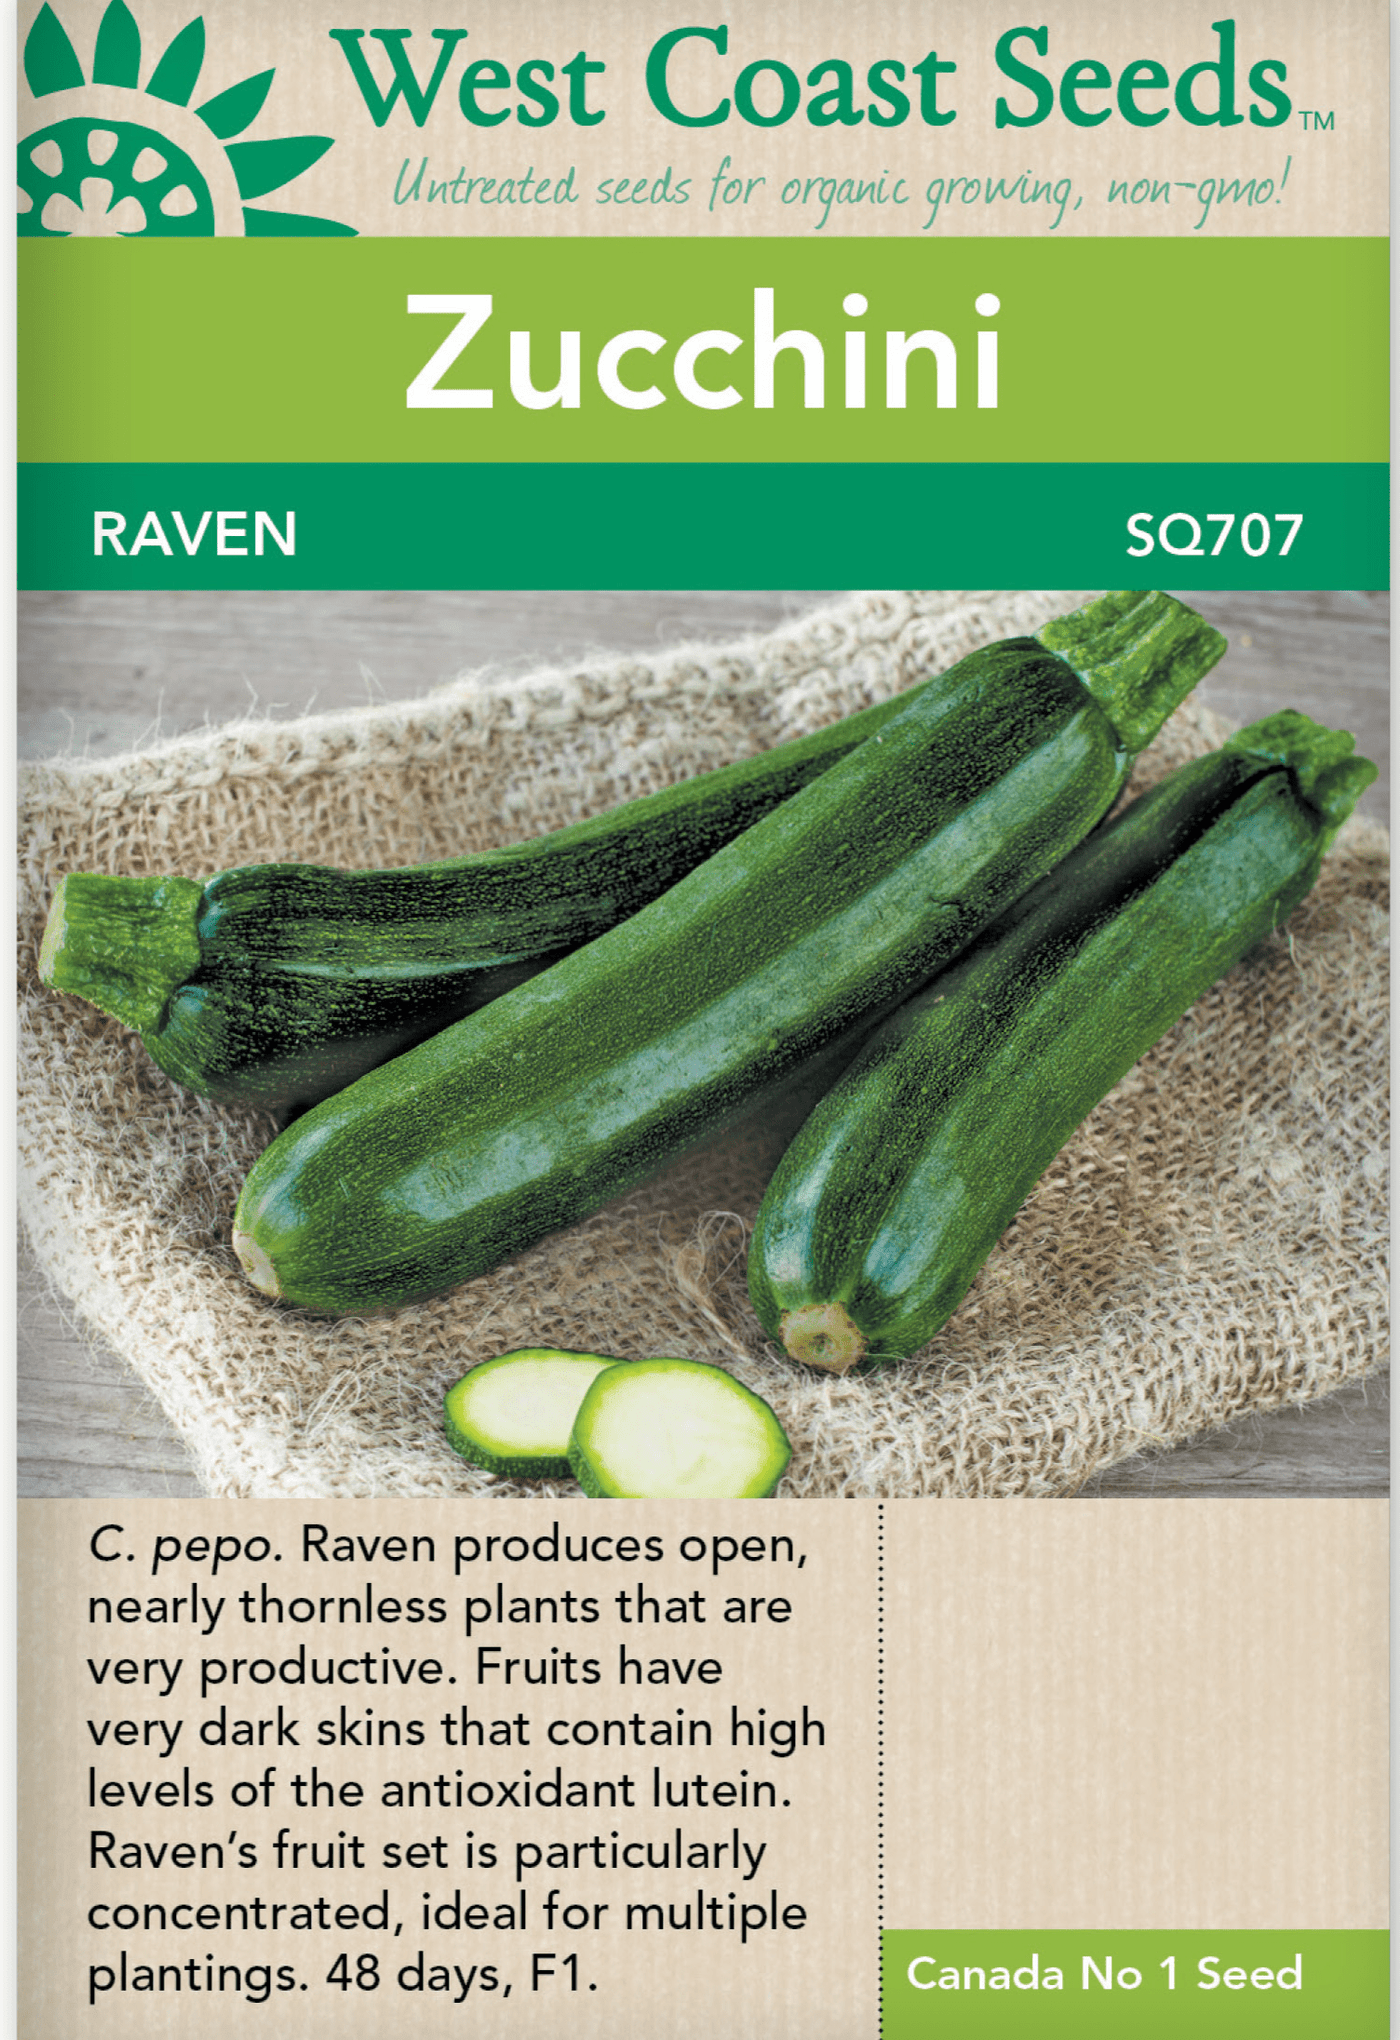 Zucchini Raven - West Coast Seeds West Coast Seeds Ltd